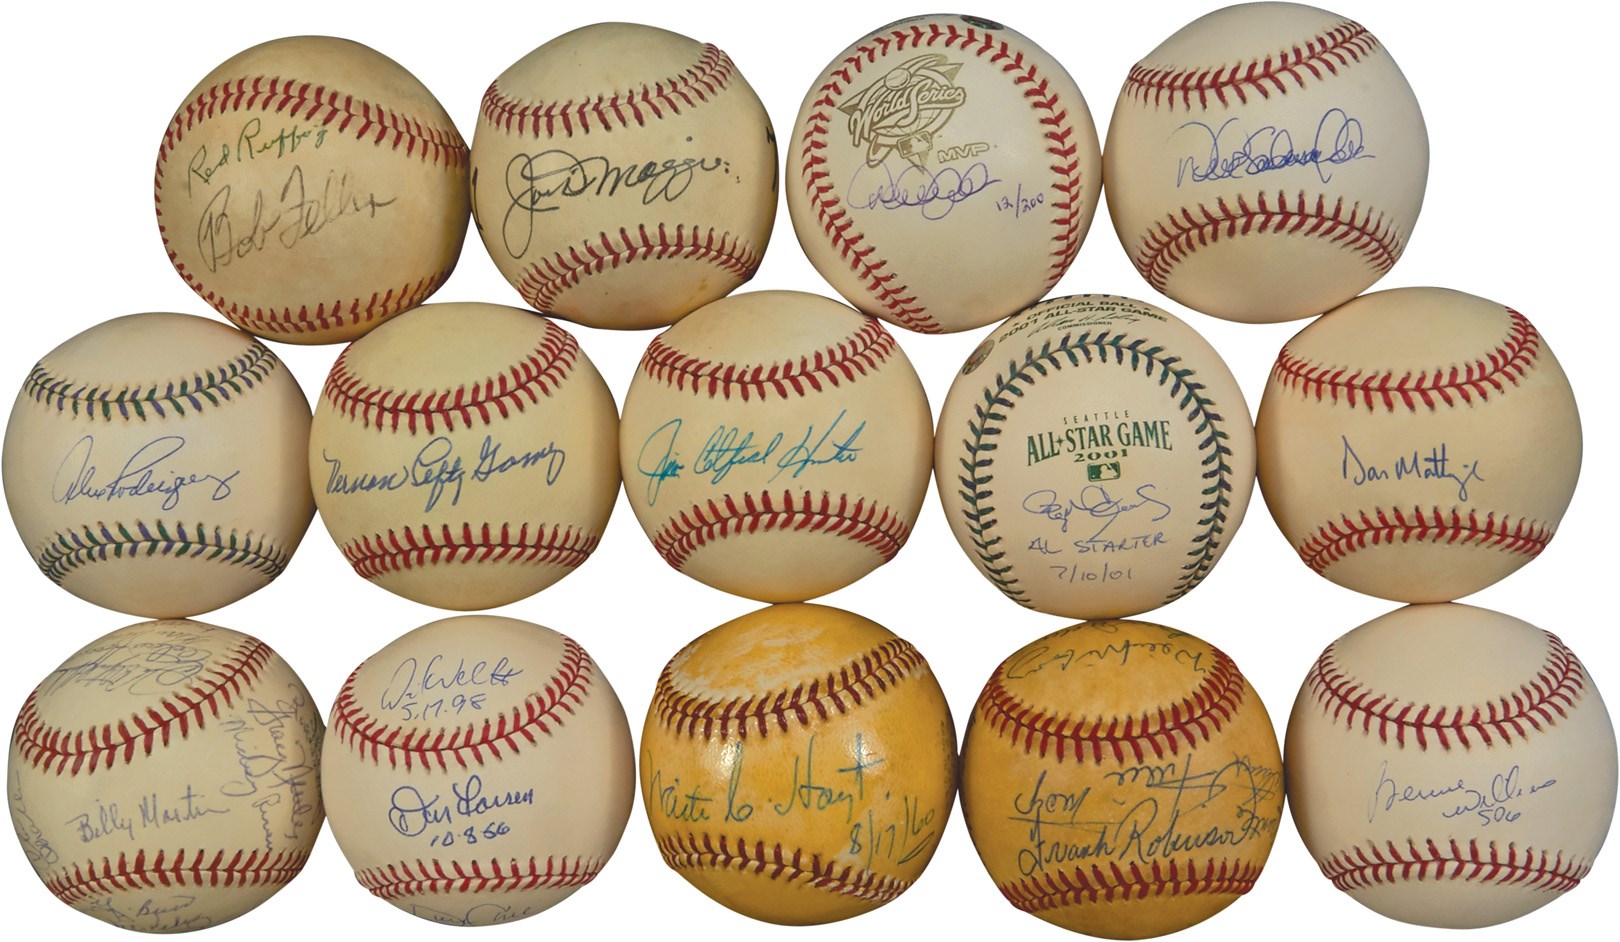 NY Yankees, Giants & Mets - Yankee Legends & 500 Home Run Club Signed Baseballs (25+)